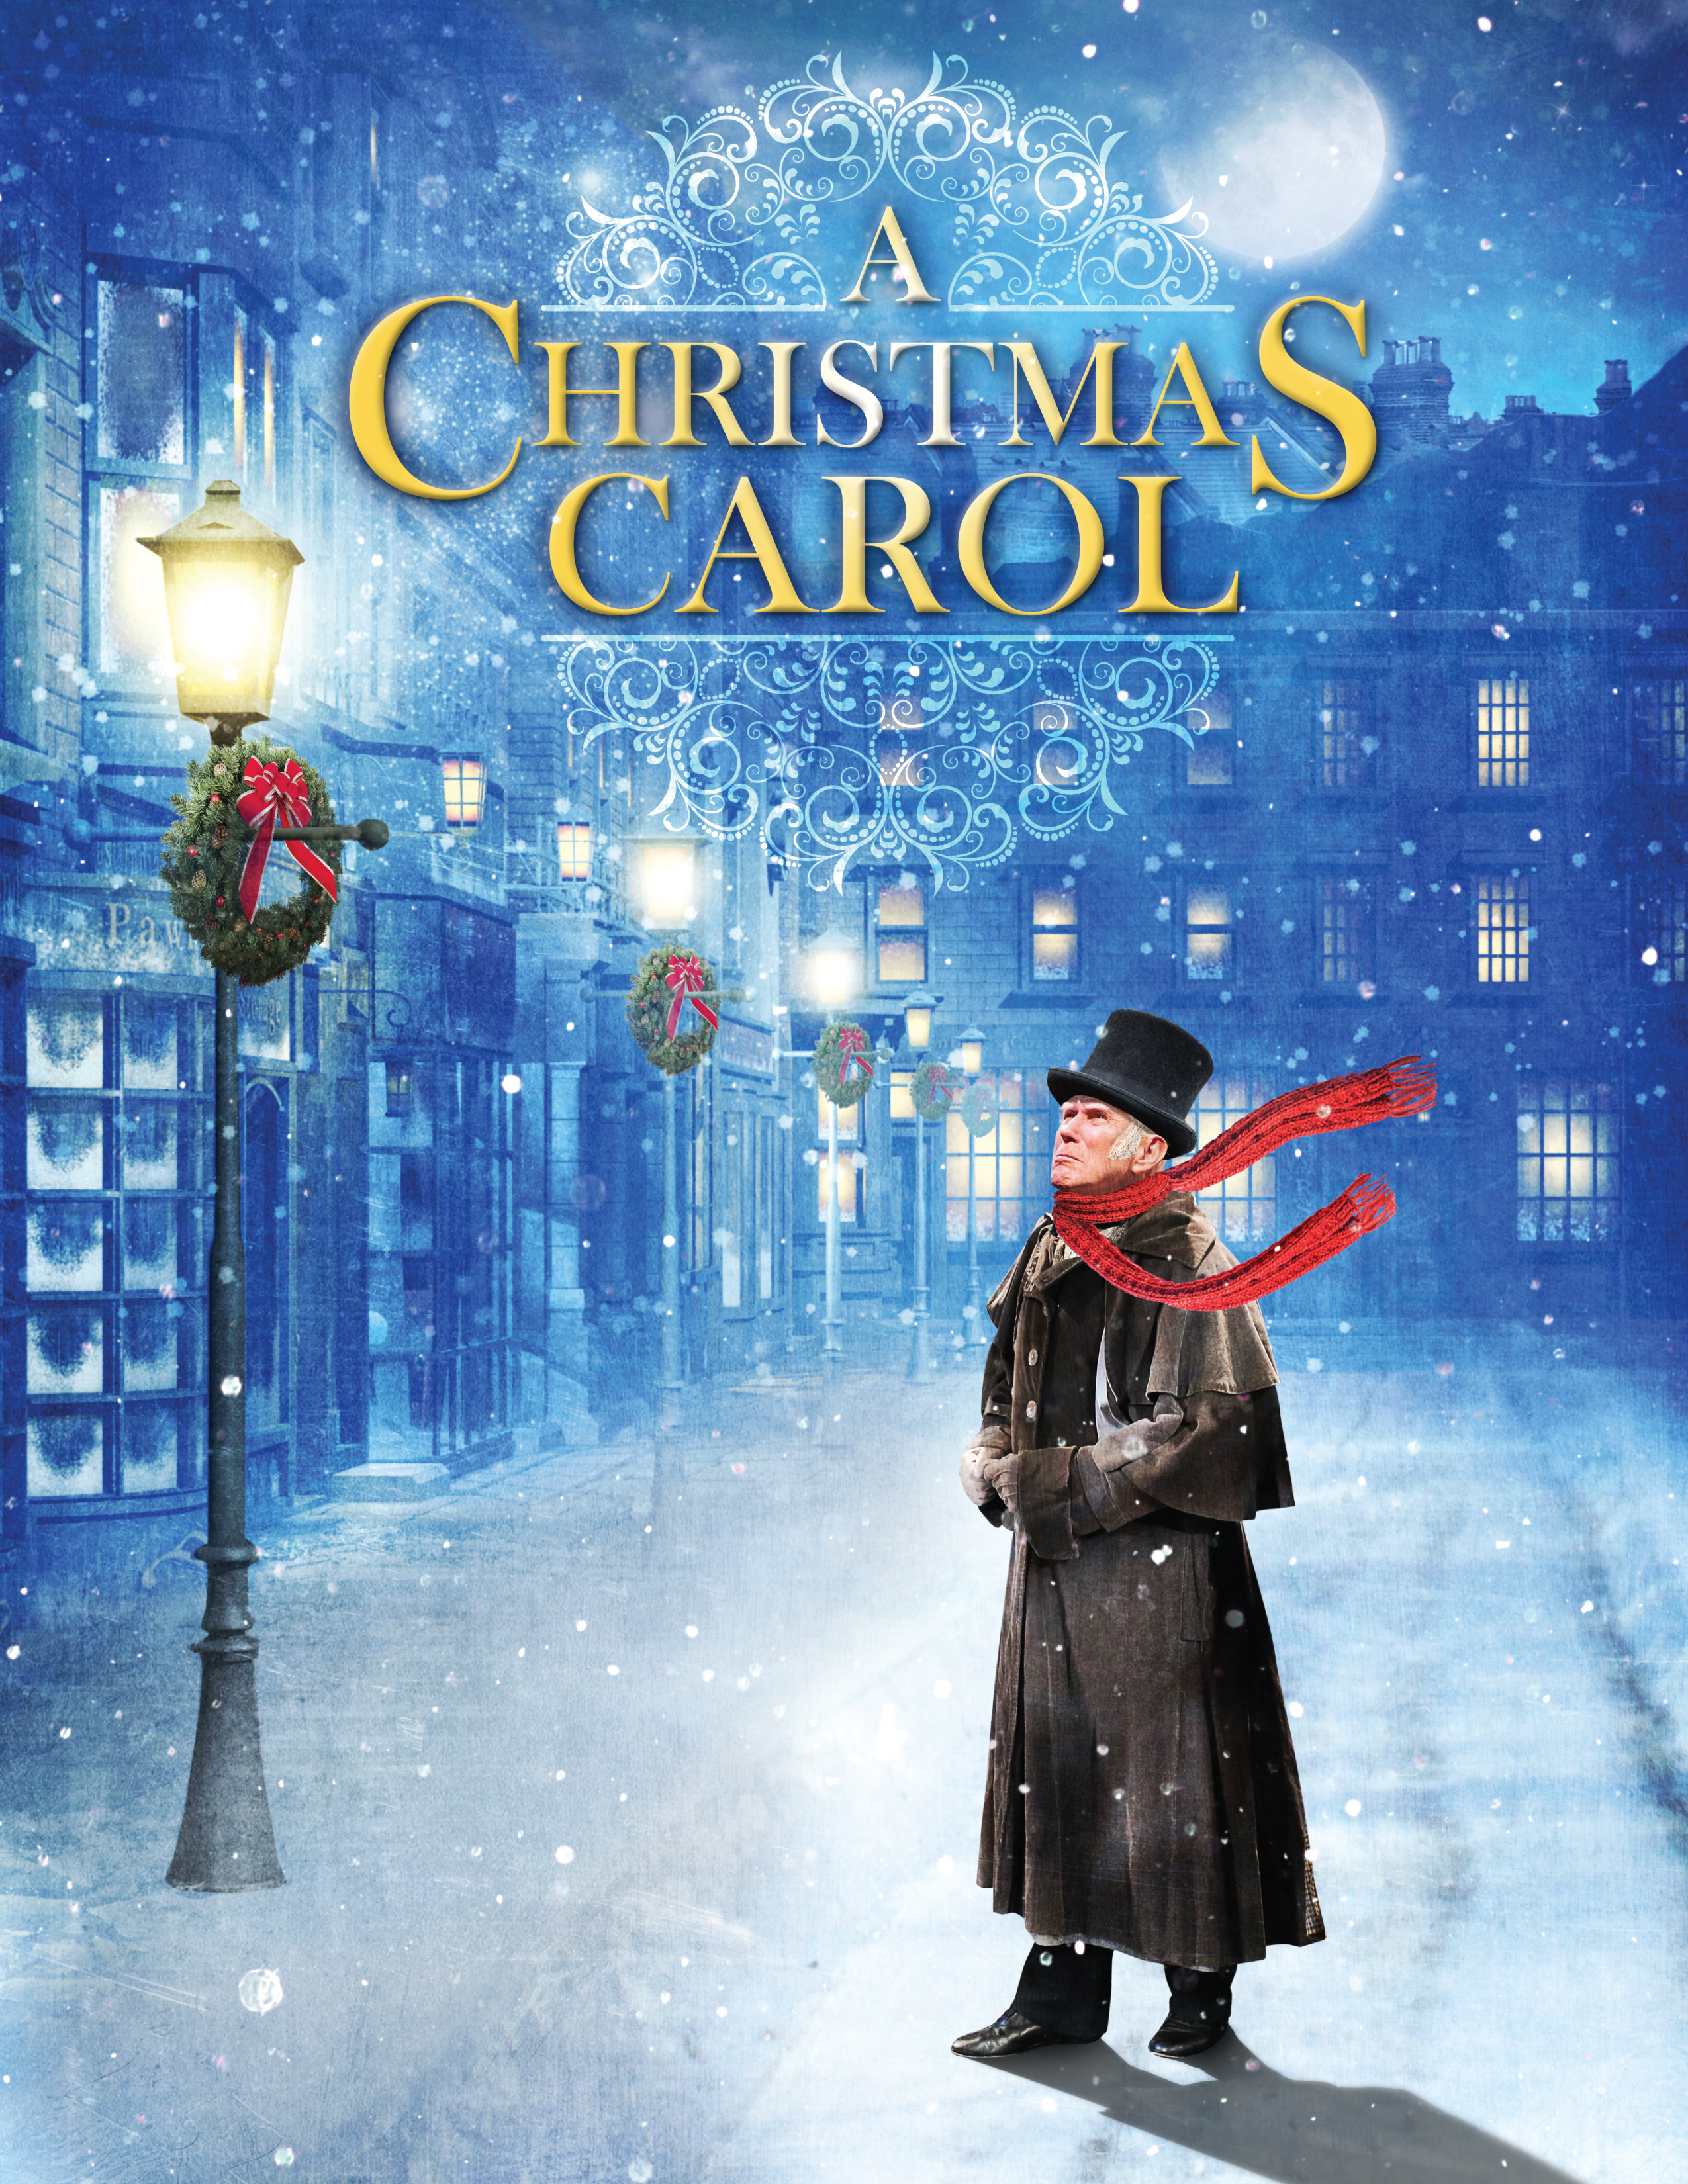 Analysis Of Scrooge In The Christmas Carol